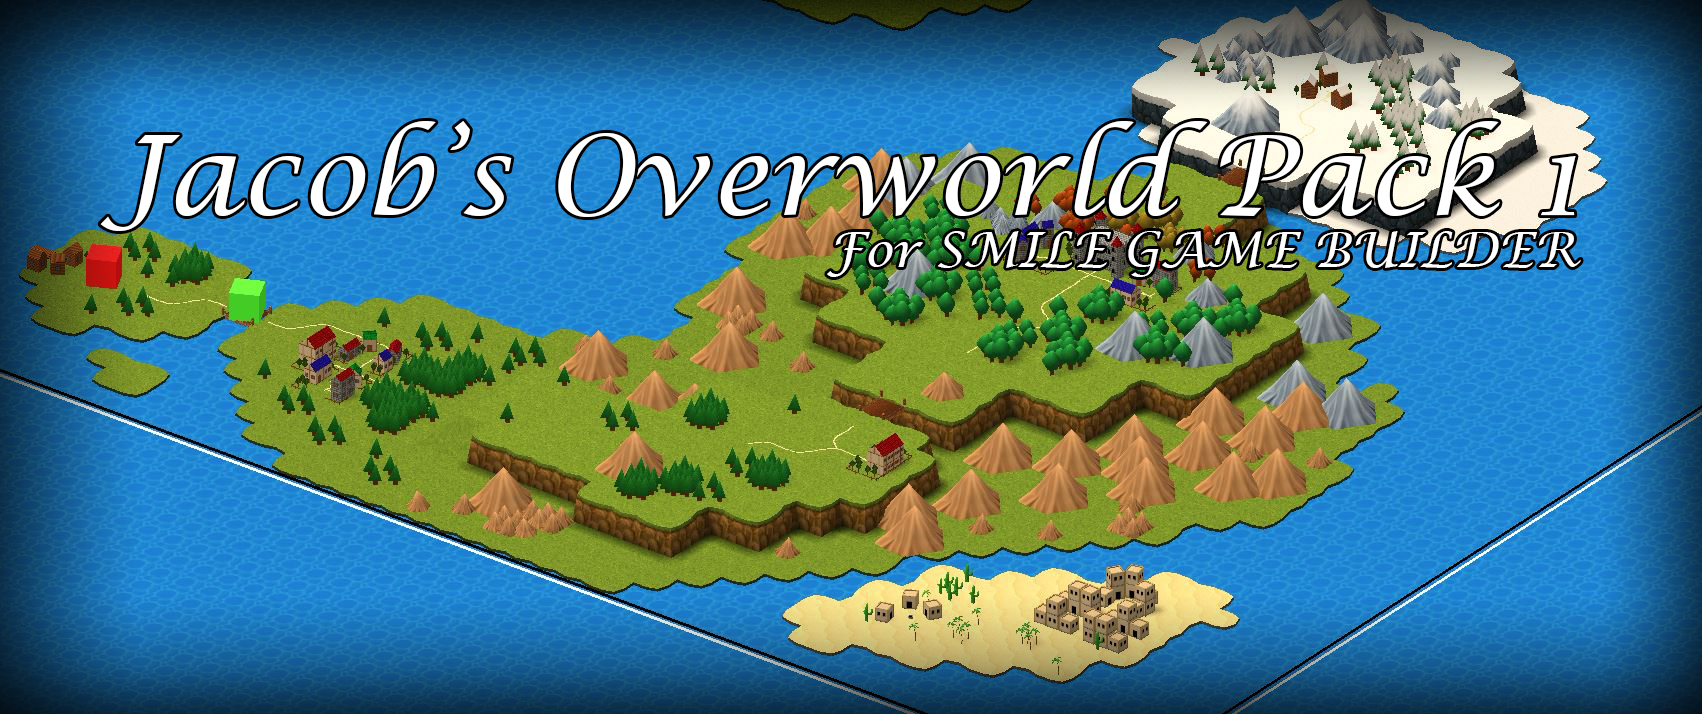 Jacob's Overworld Pack 1 for SMILE GAME BUILDER